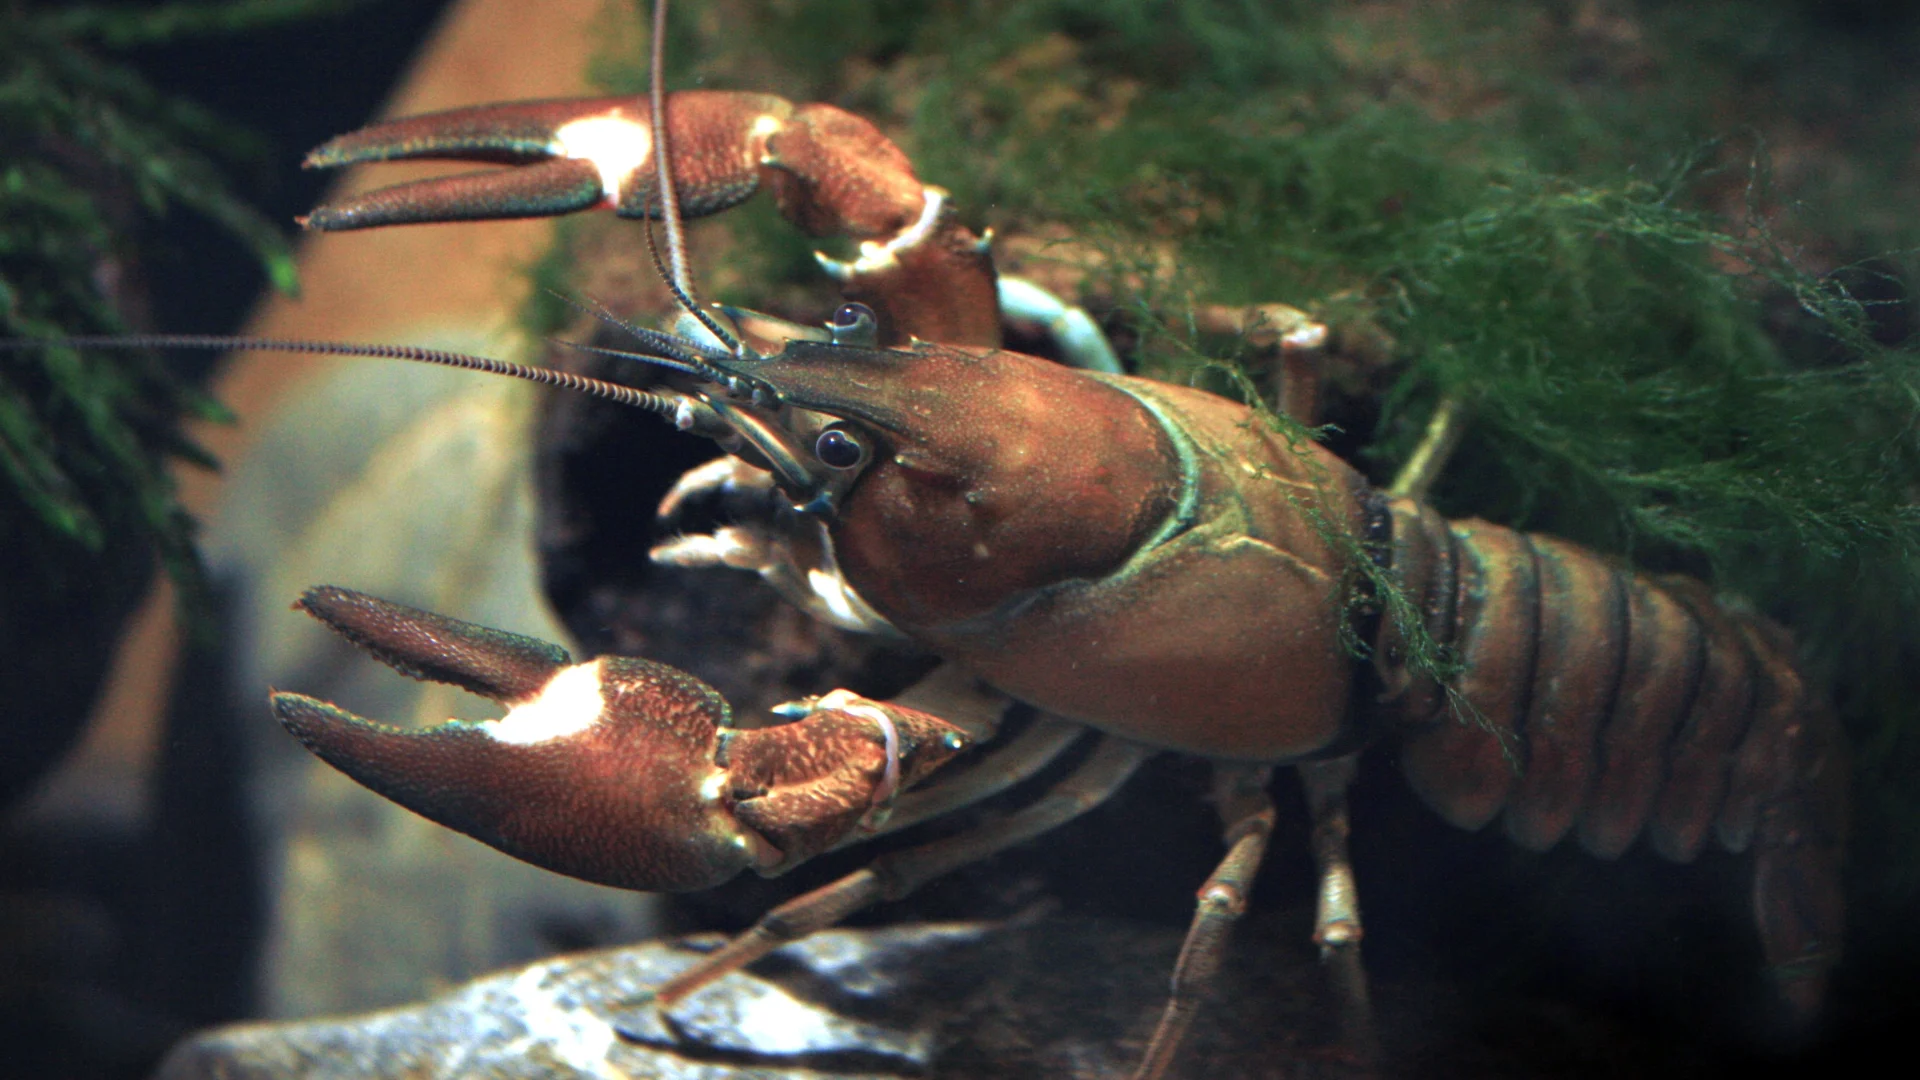 WIKIPEDIA - Crayfish